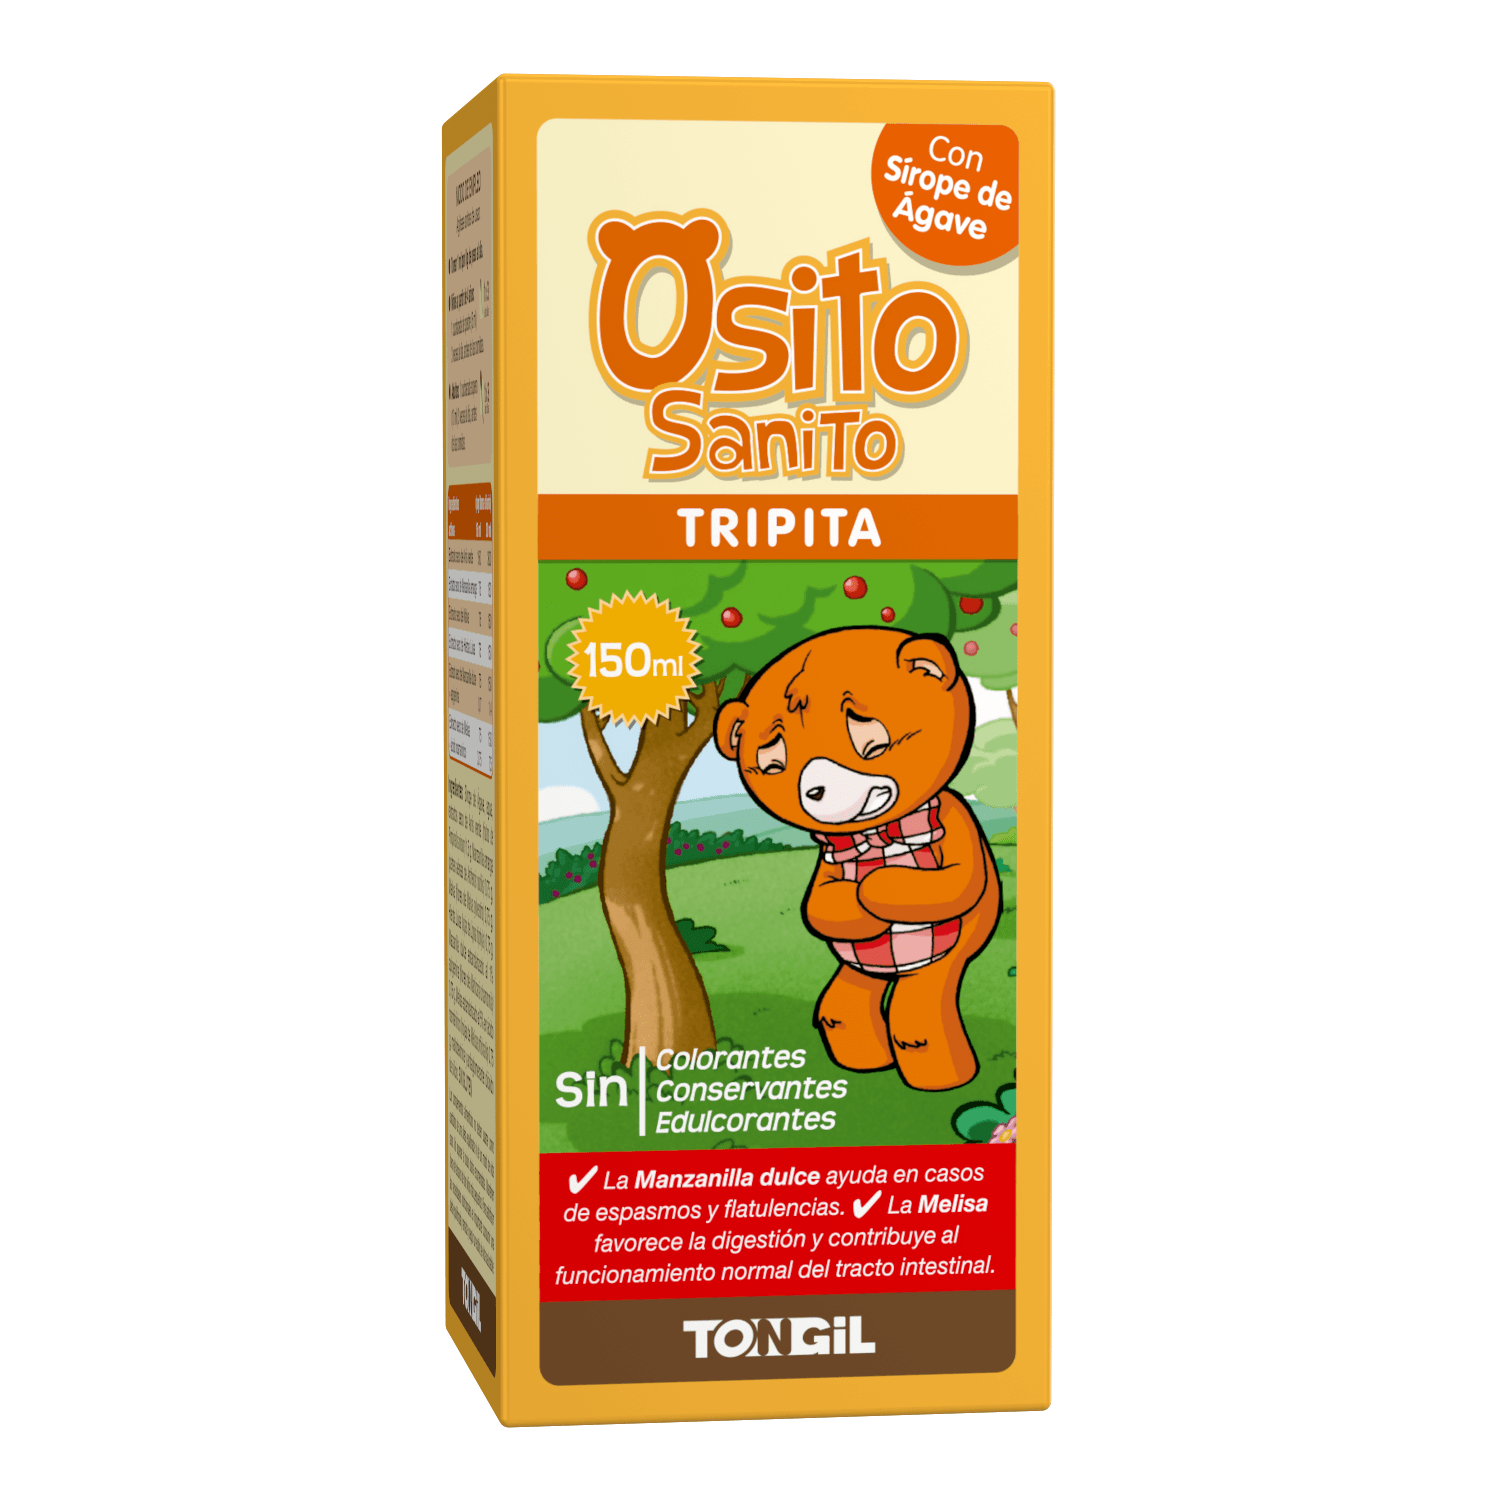 Osito Sanito Tripita 150 ml | Tongil - Dietetica Ferrer